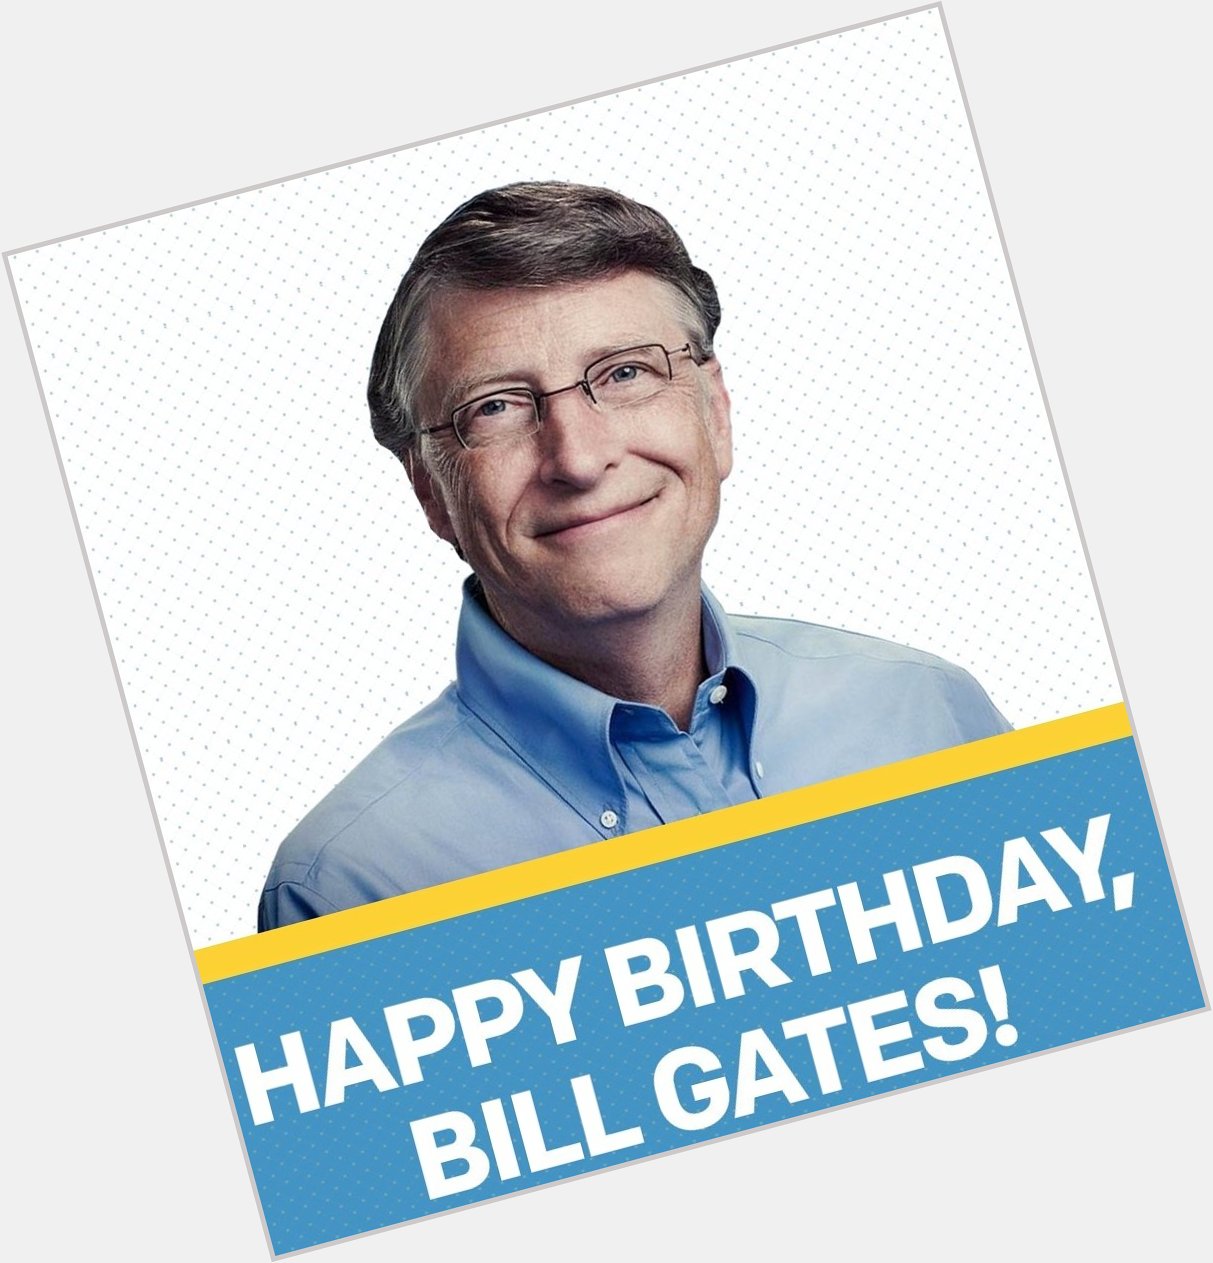  1955: Co-founder of Bill Gates was born. Happy birthday 